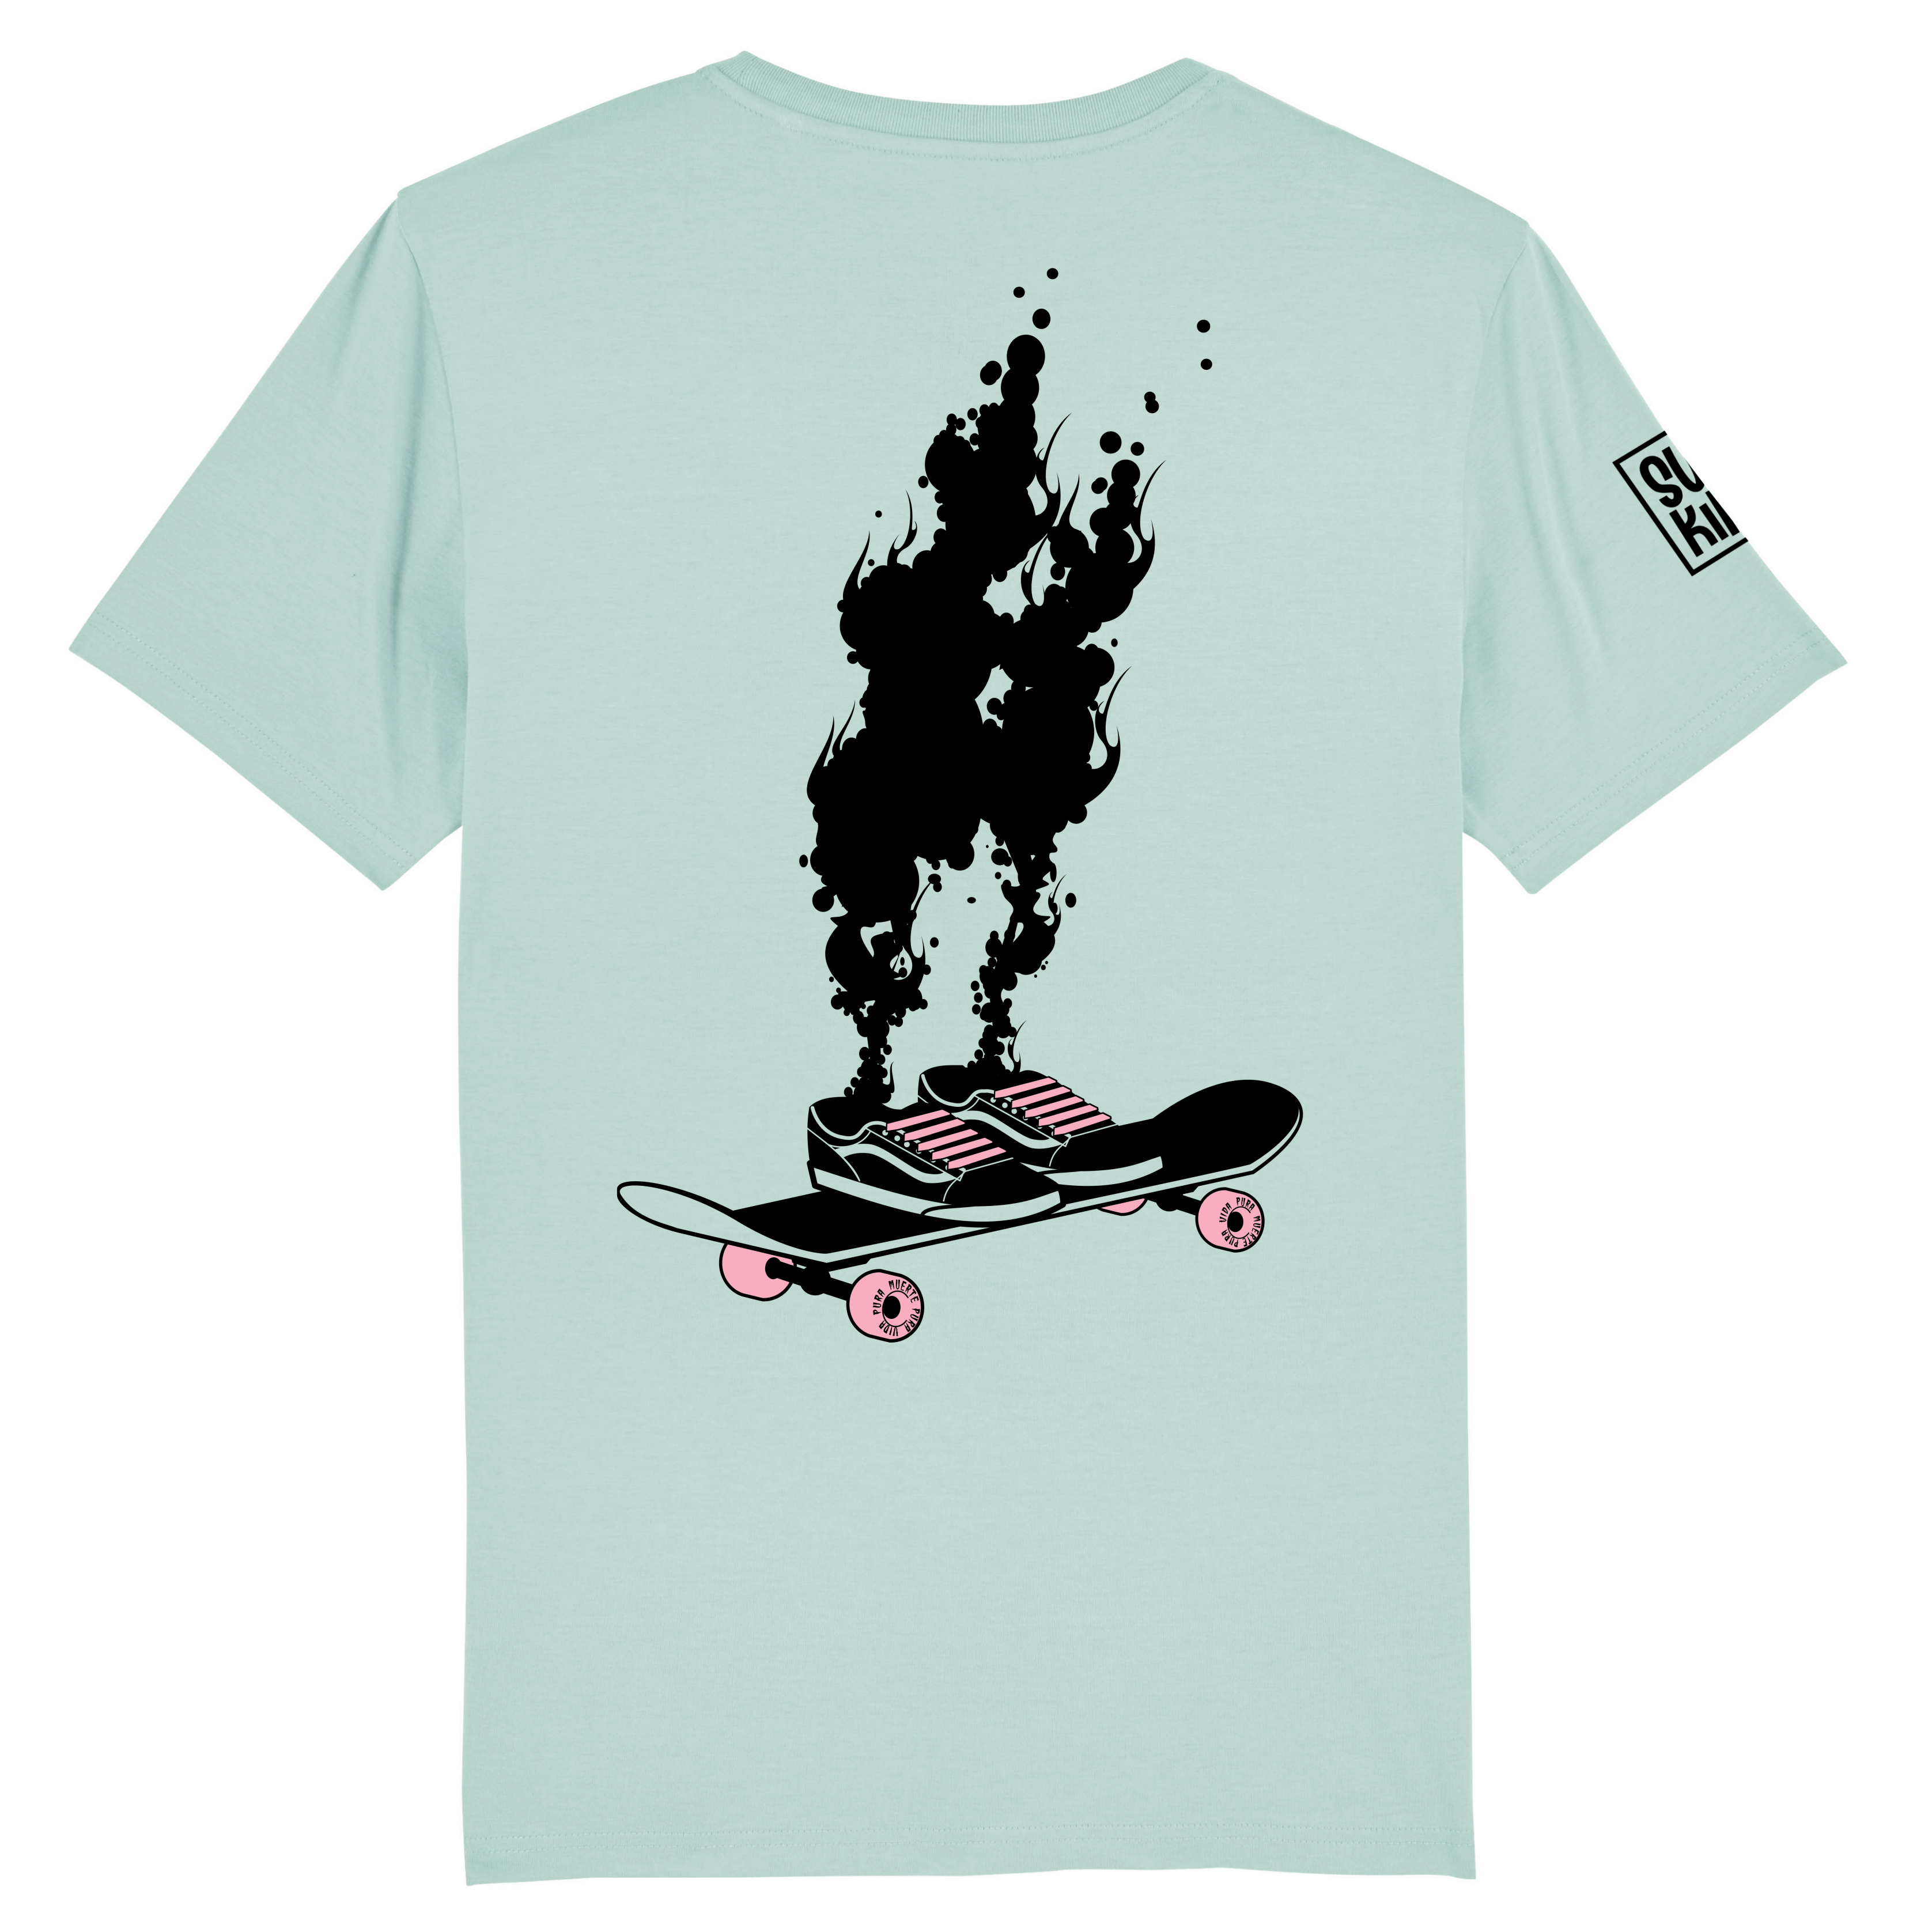 Skate T-shirt men, turquoise, Spontaneous combustion